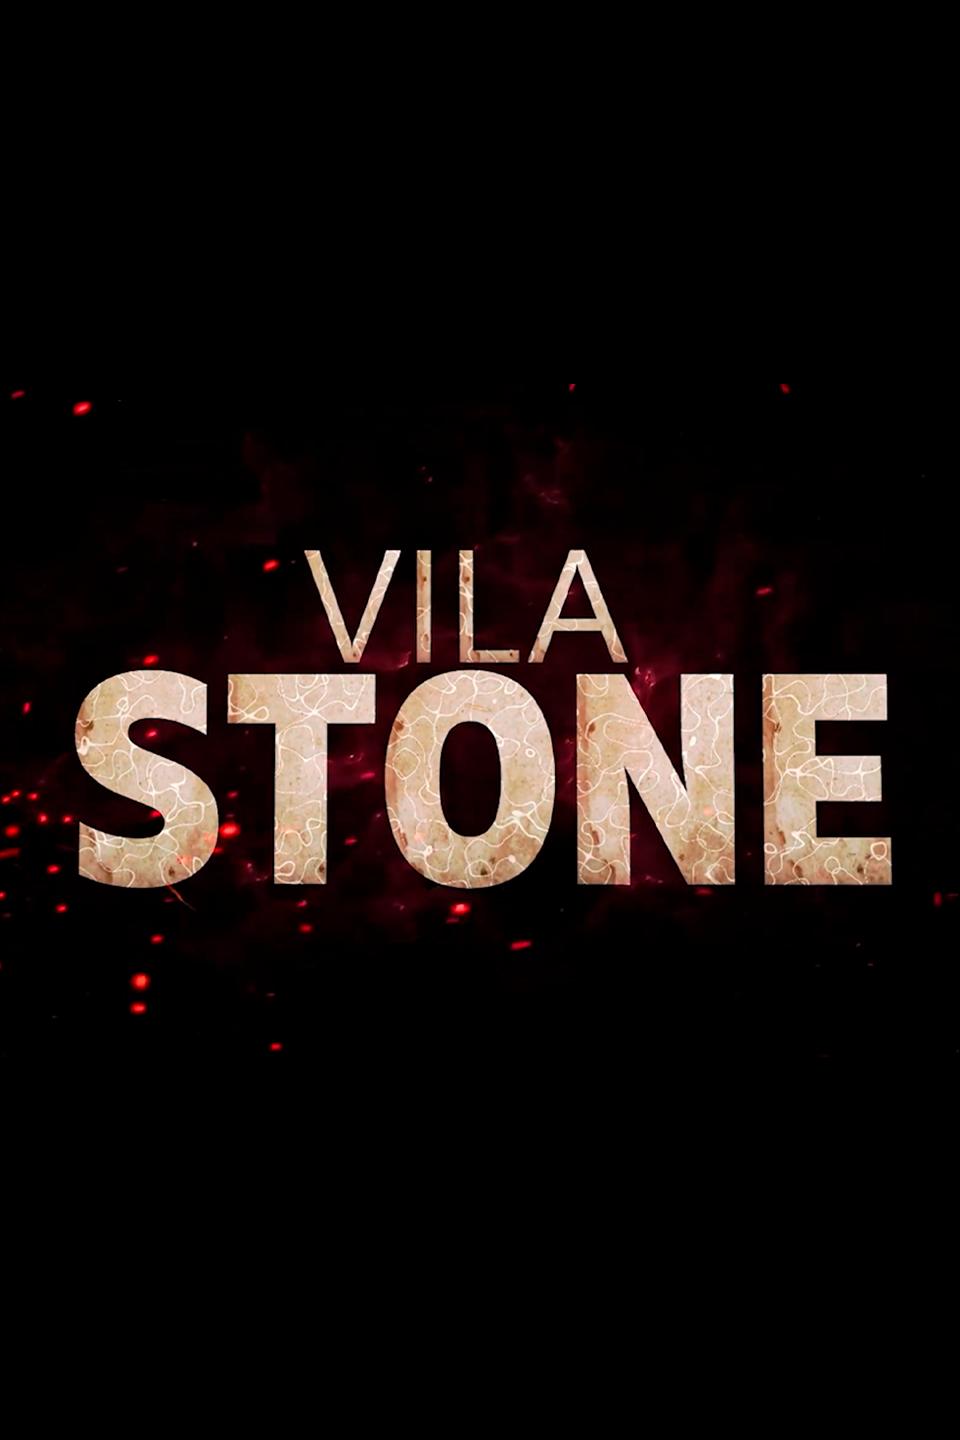 Vila Stone